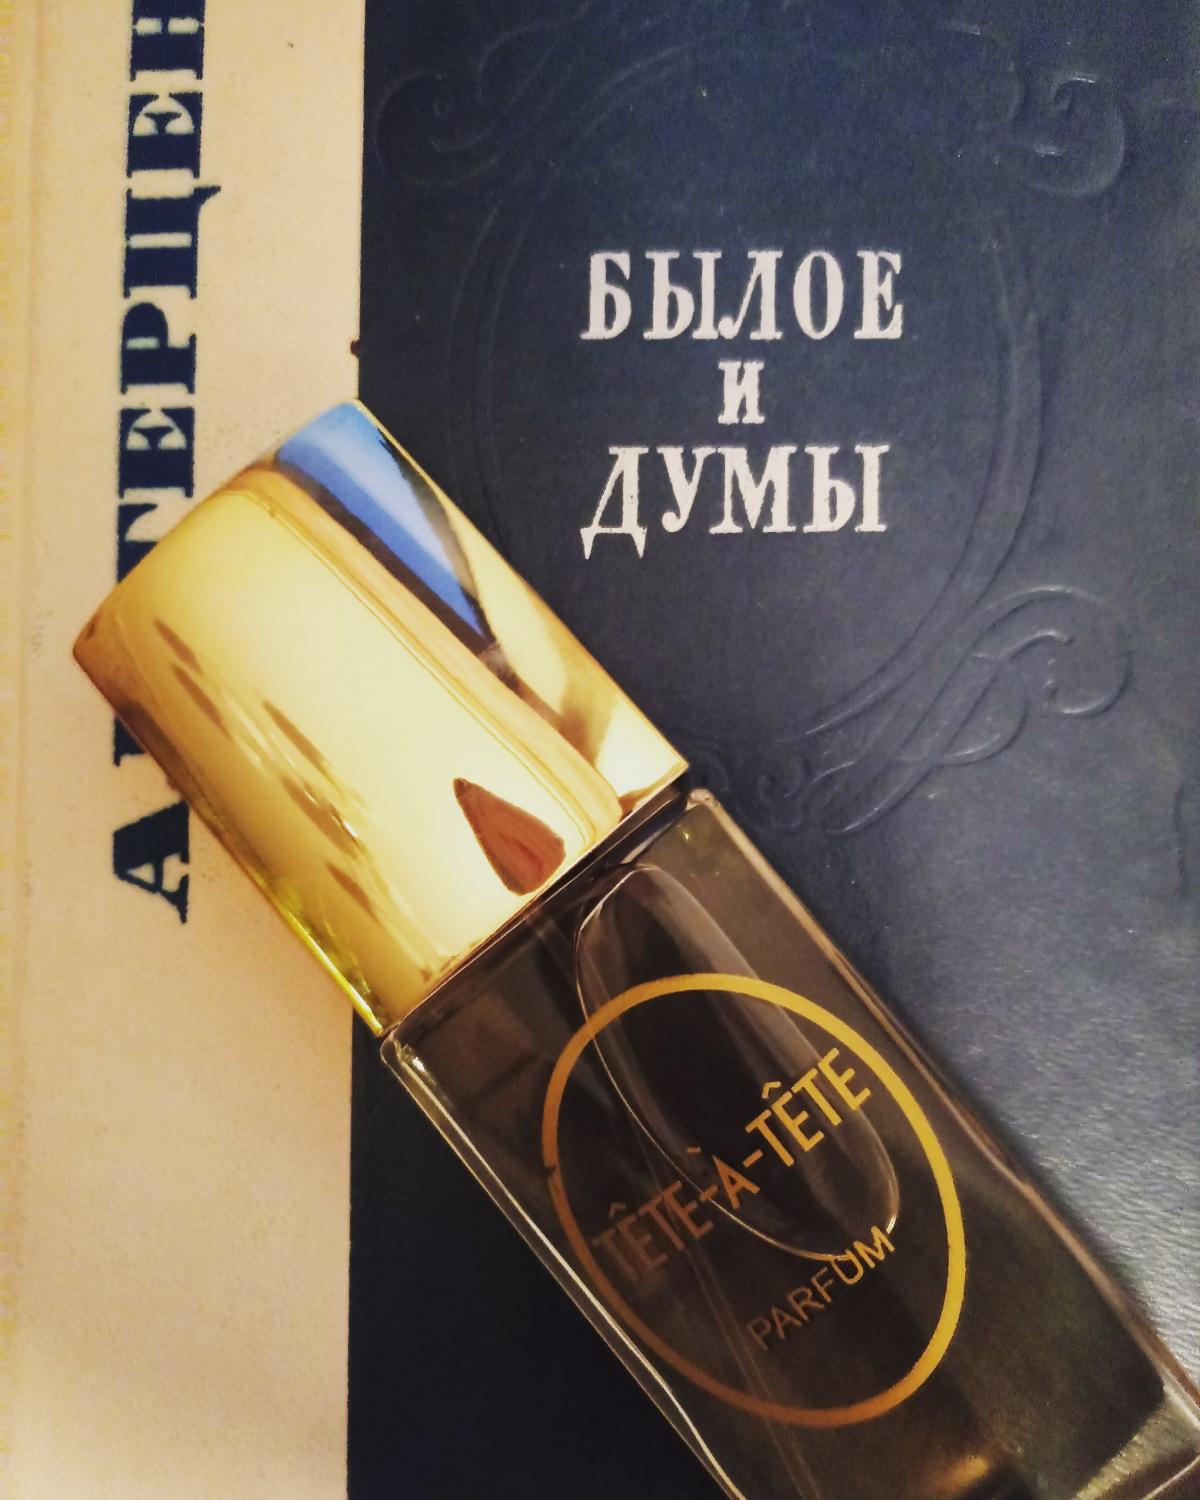 Tete-a-Tete Новая Заря (The New Dawn) perfume - a fragrance for women 1978